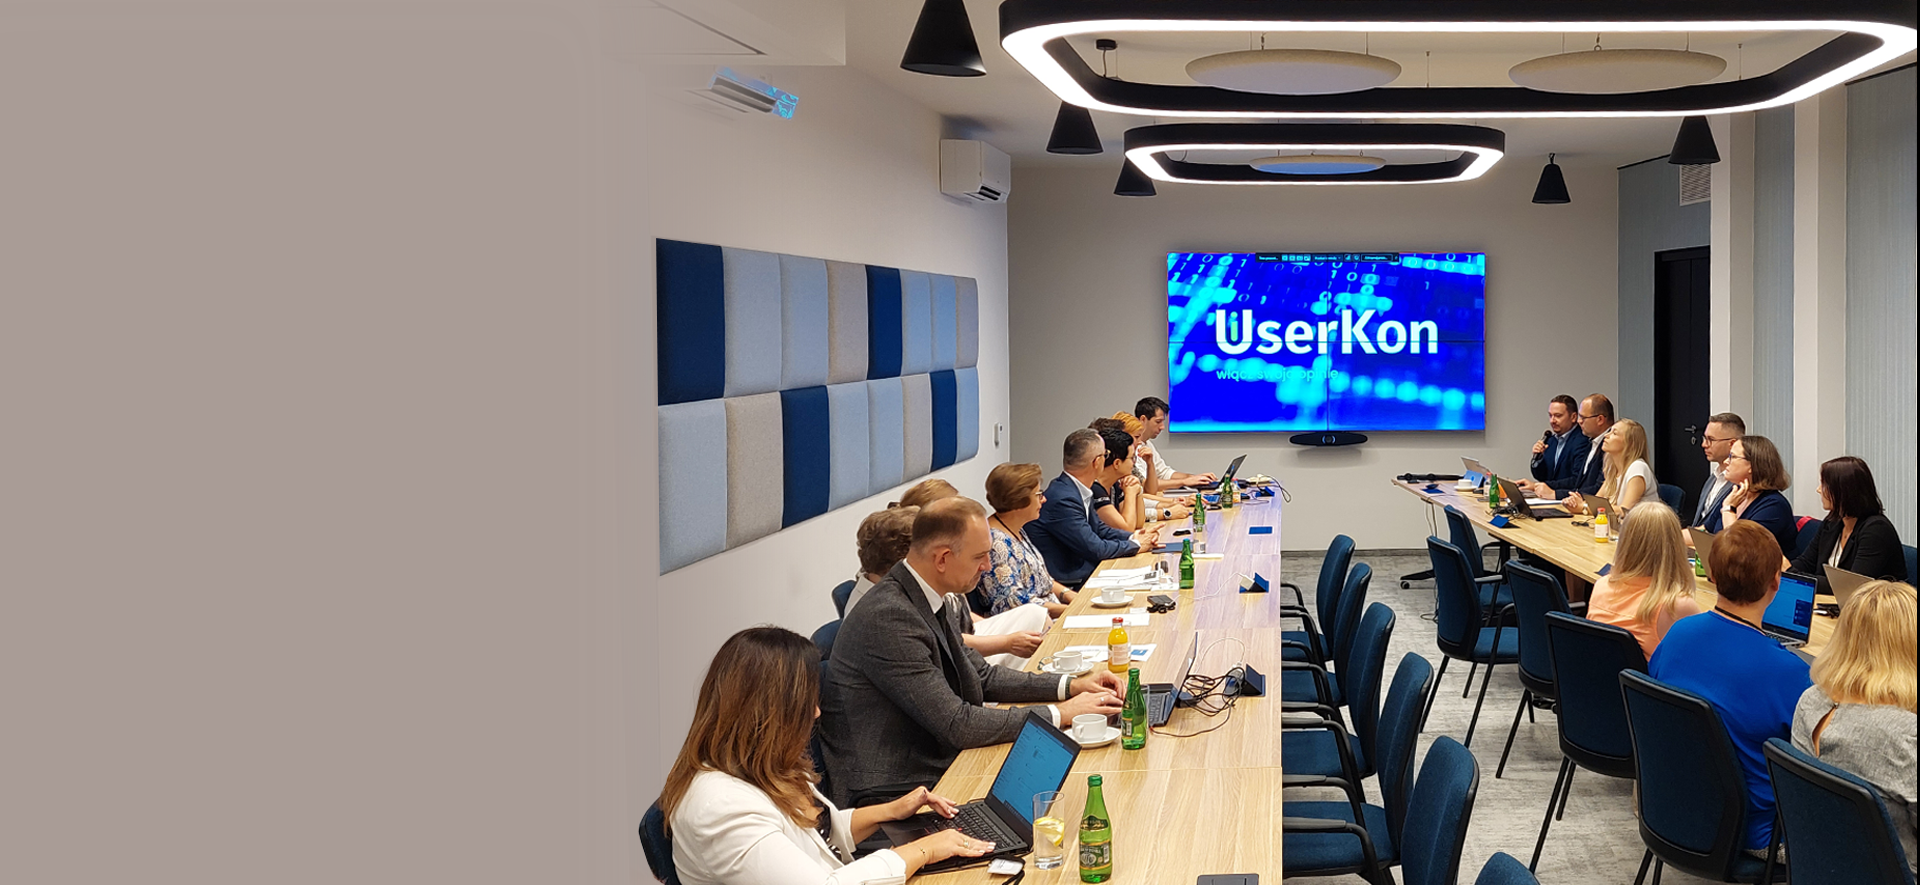 Grupa osób na spotkaniu w ramach UserKon